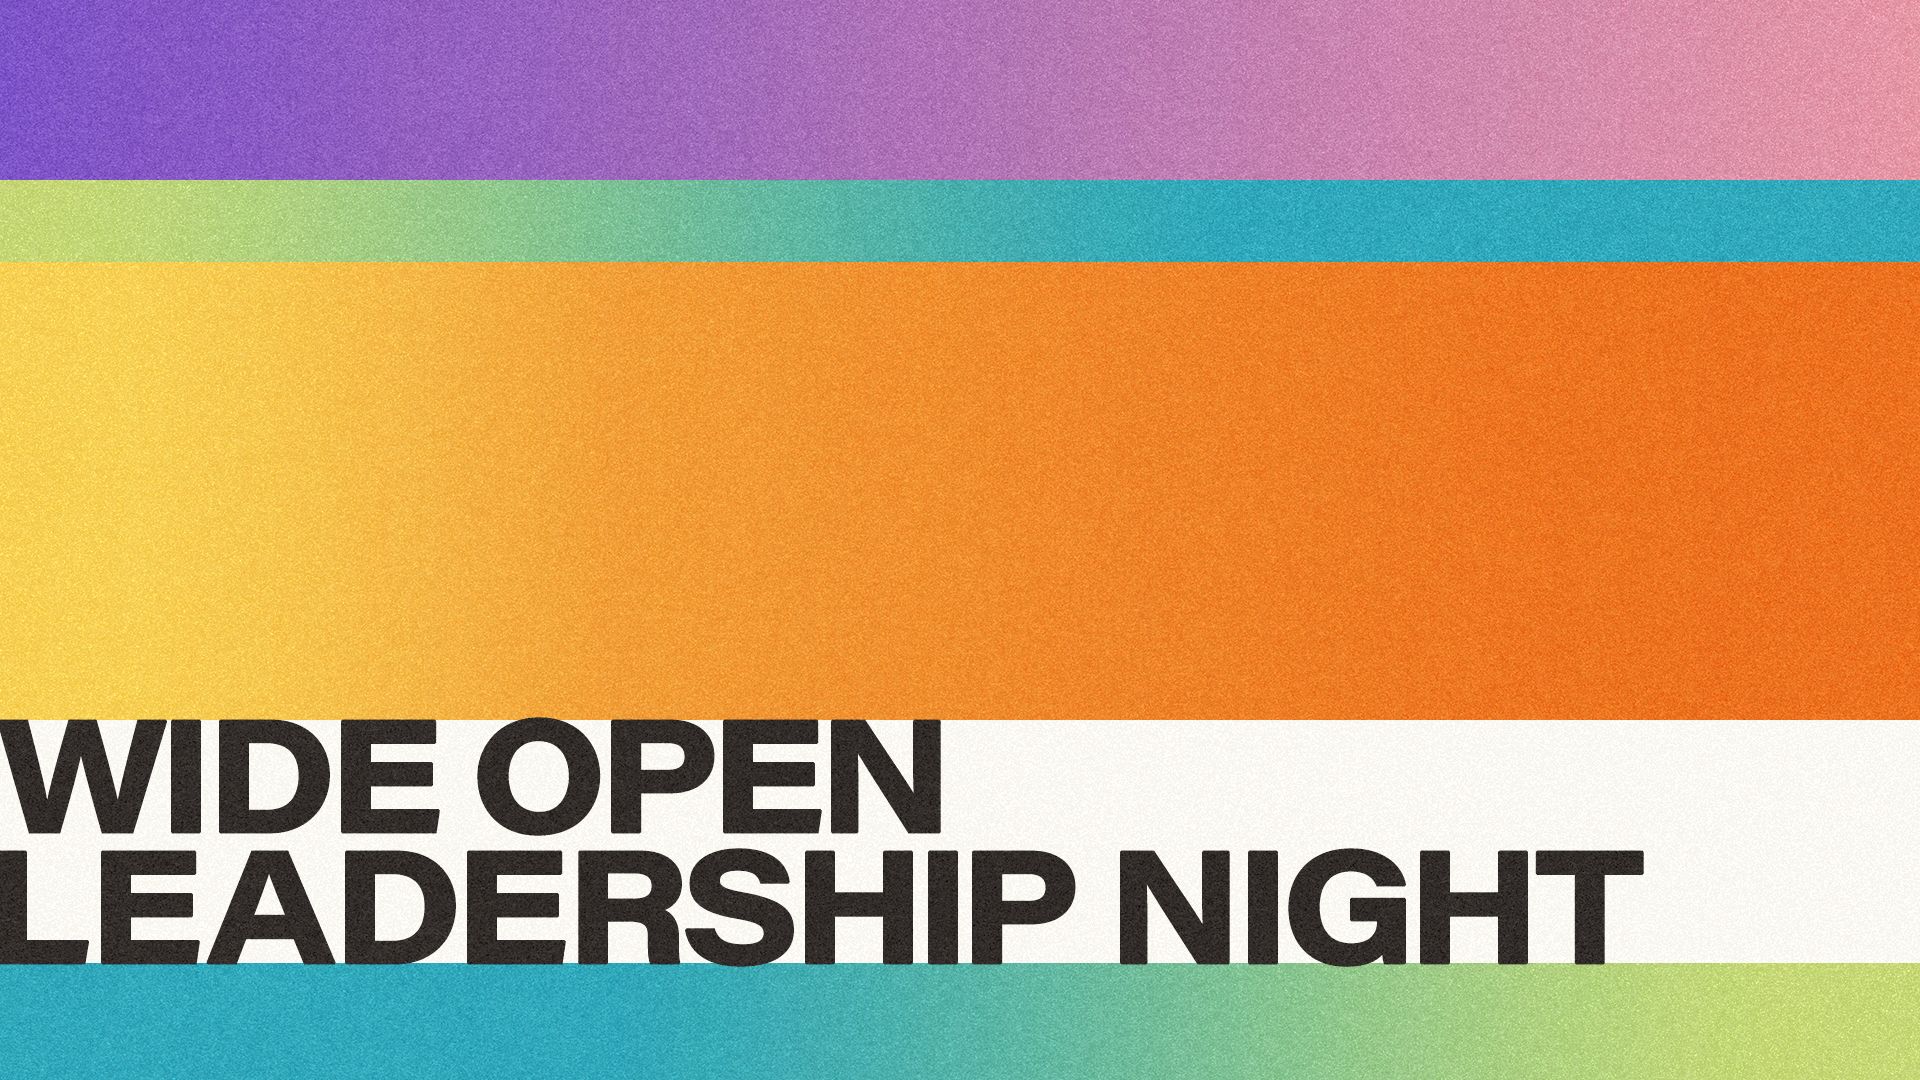 Wide Open Leadership Night Image